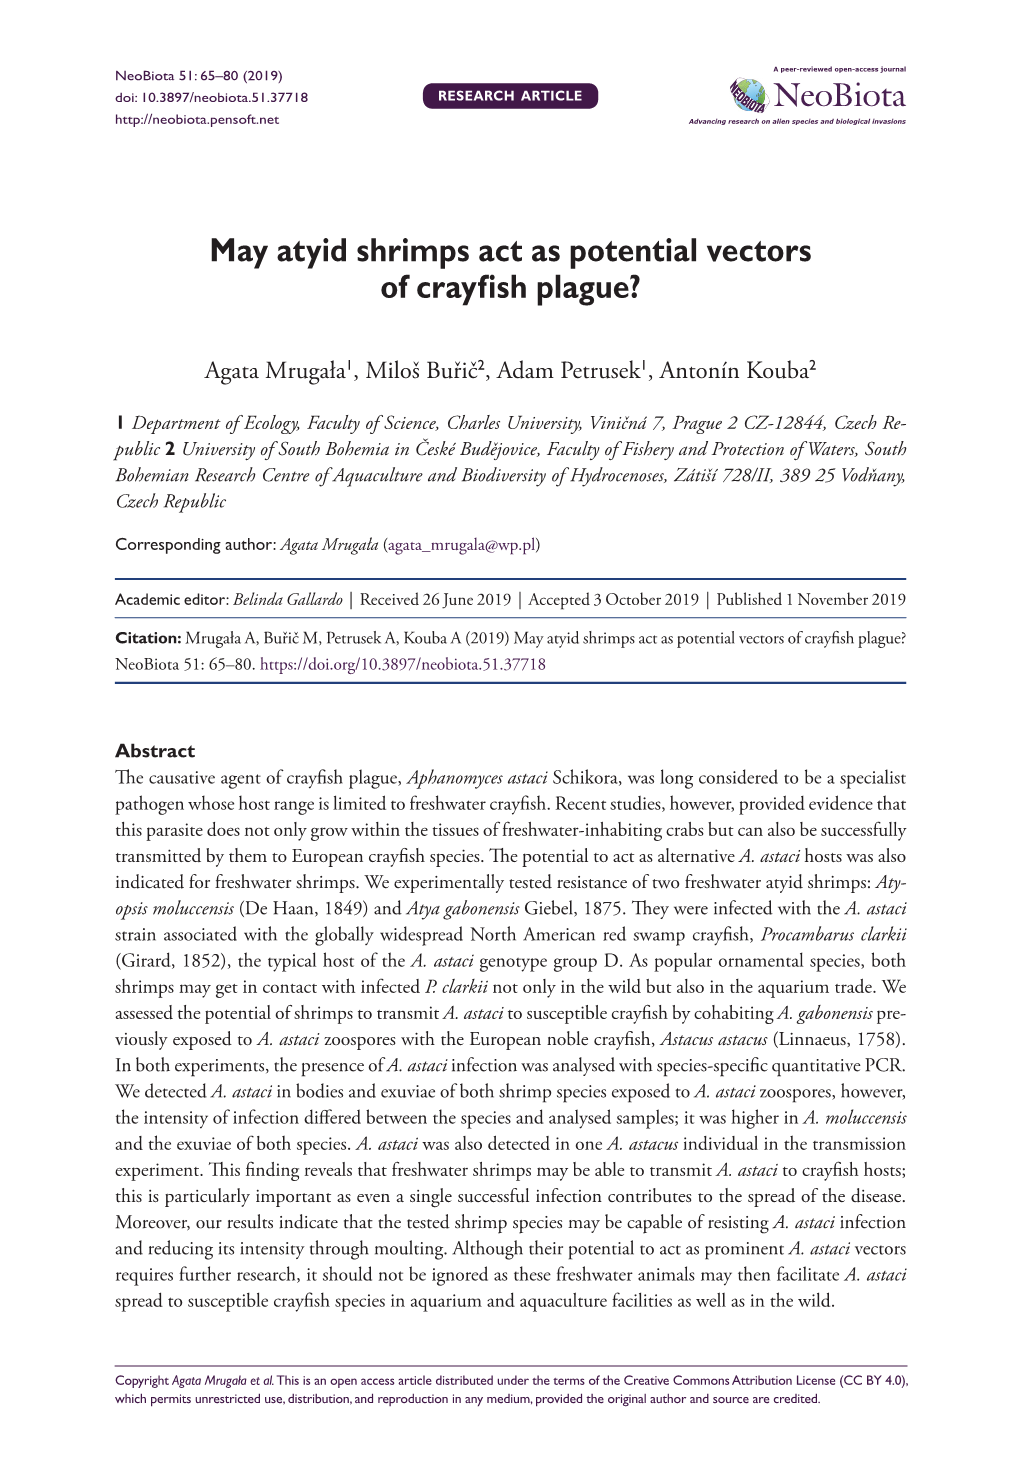 ﻿May Atyid Shrimps Act As Potential Vectors of Crayfish Plague?